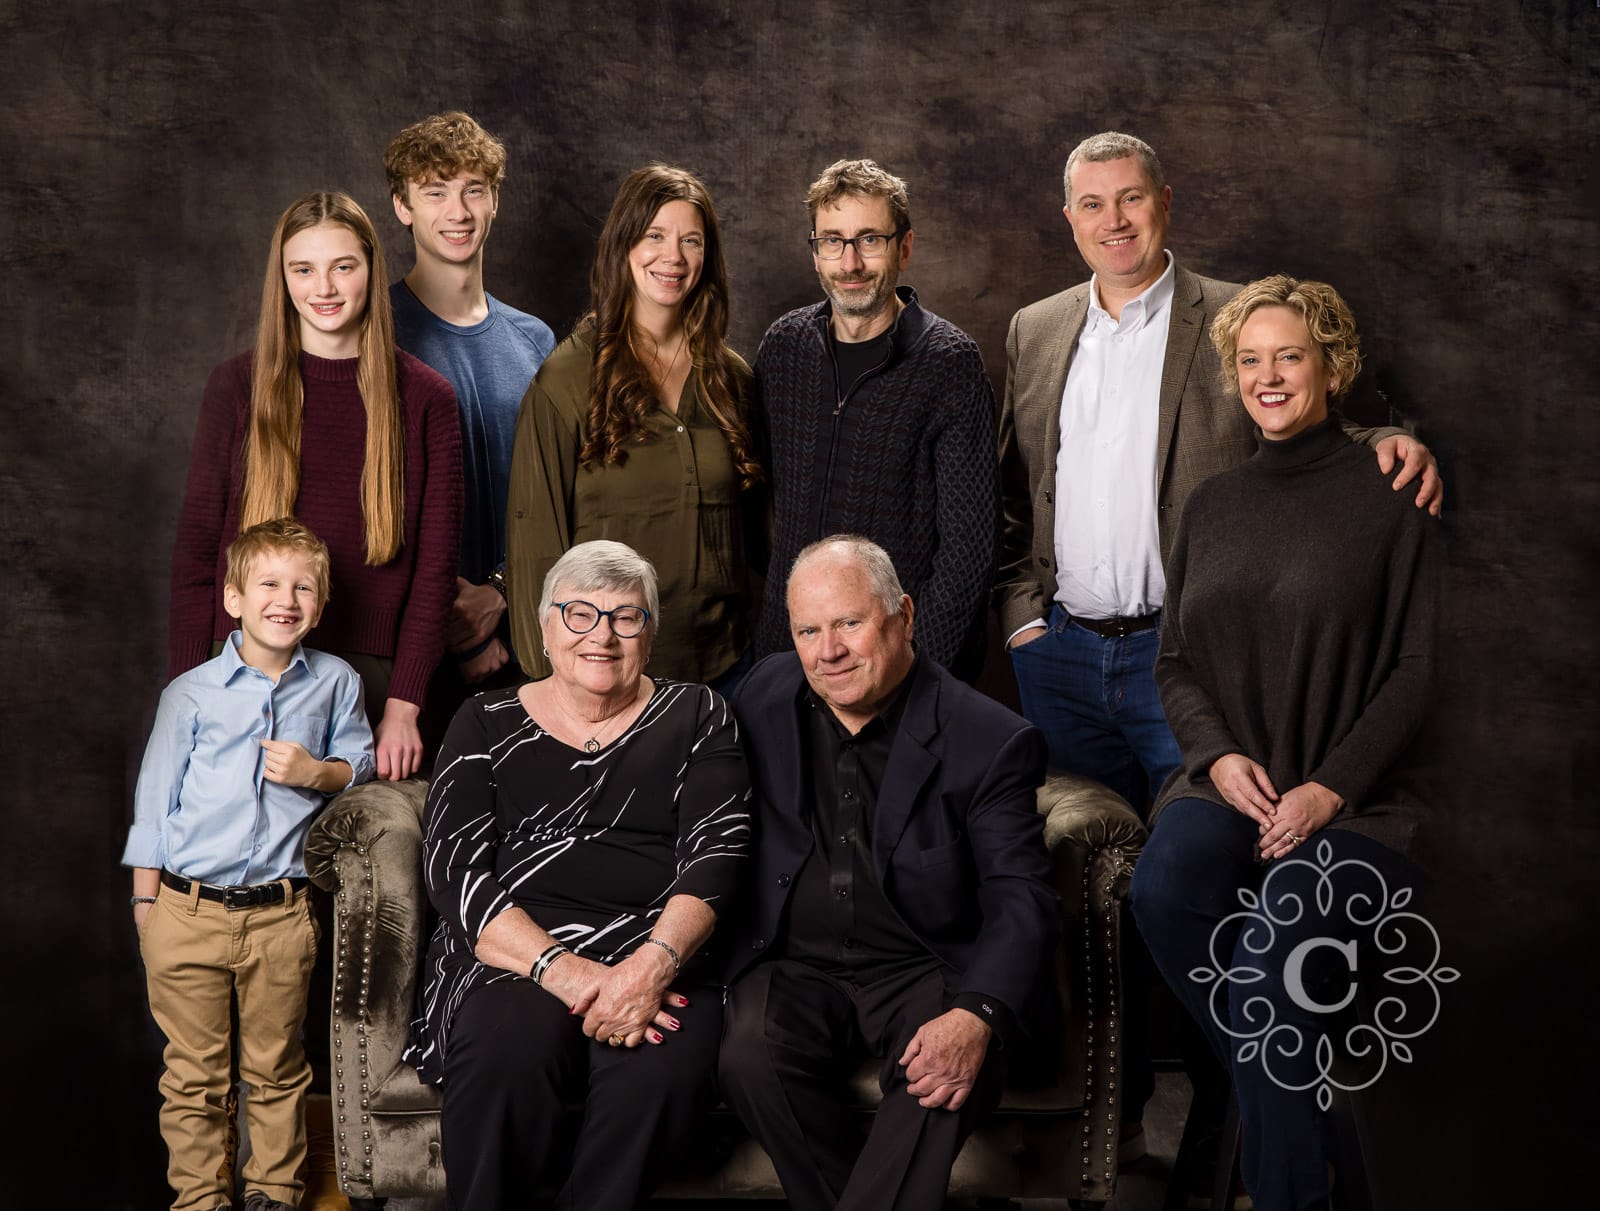 Extended Family Studio Photo